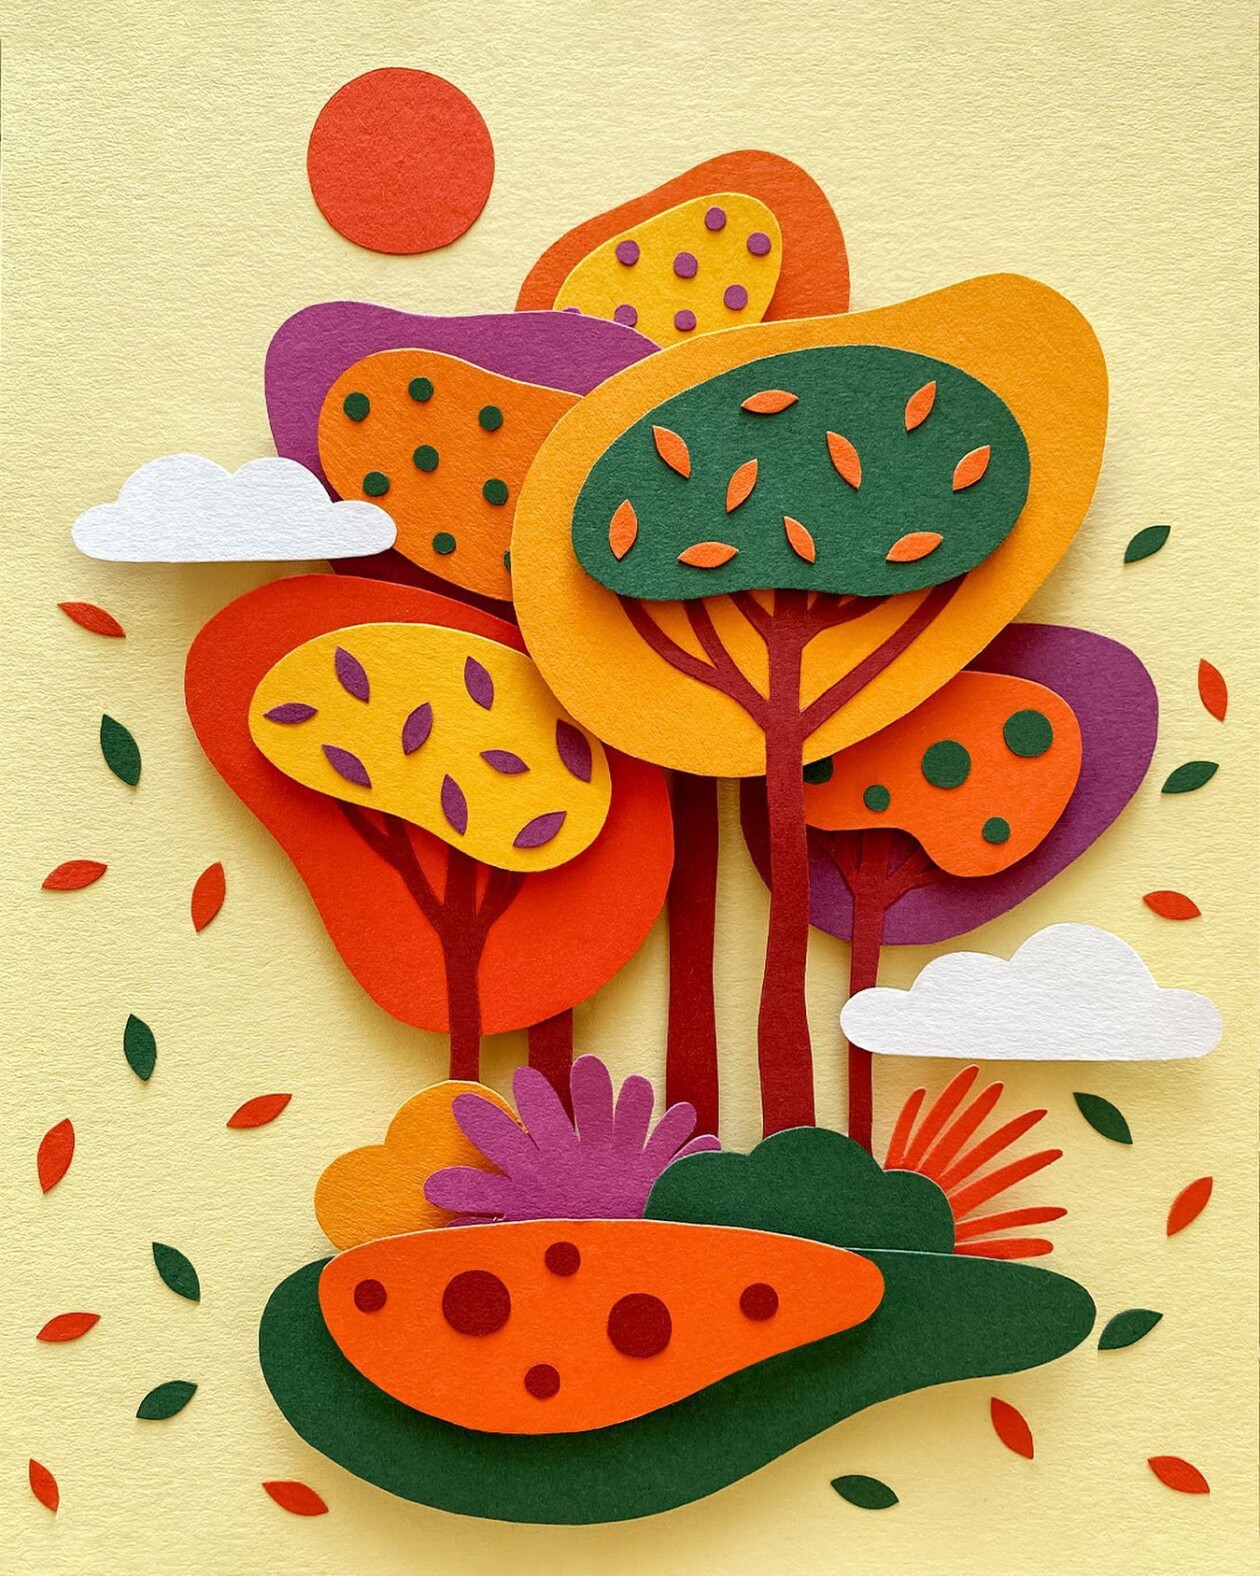 Absolutely Stunning Paper Cutting Illustrations By Mariia Lapitan Yashchenko (6)